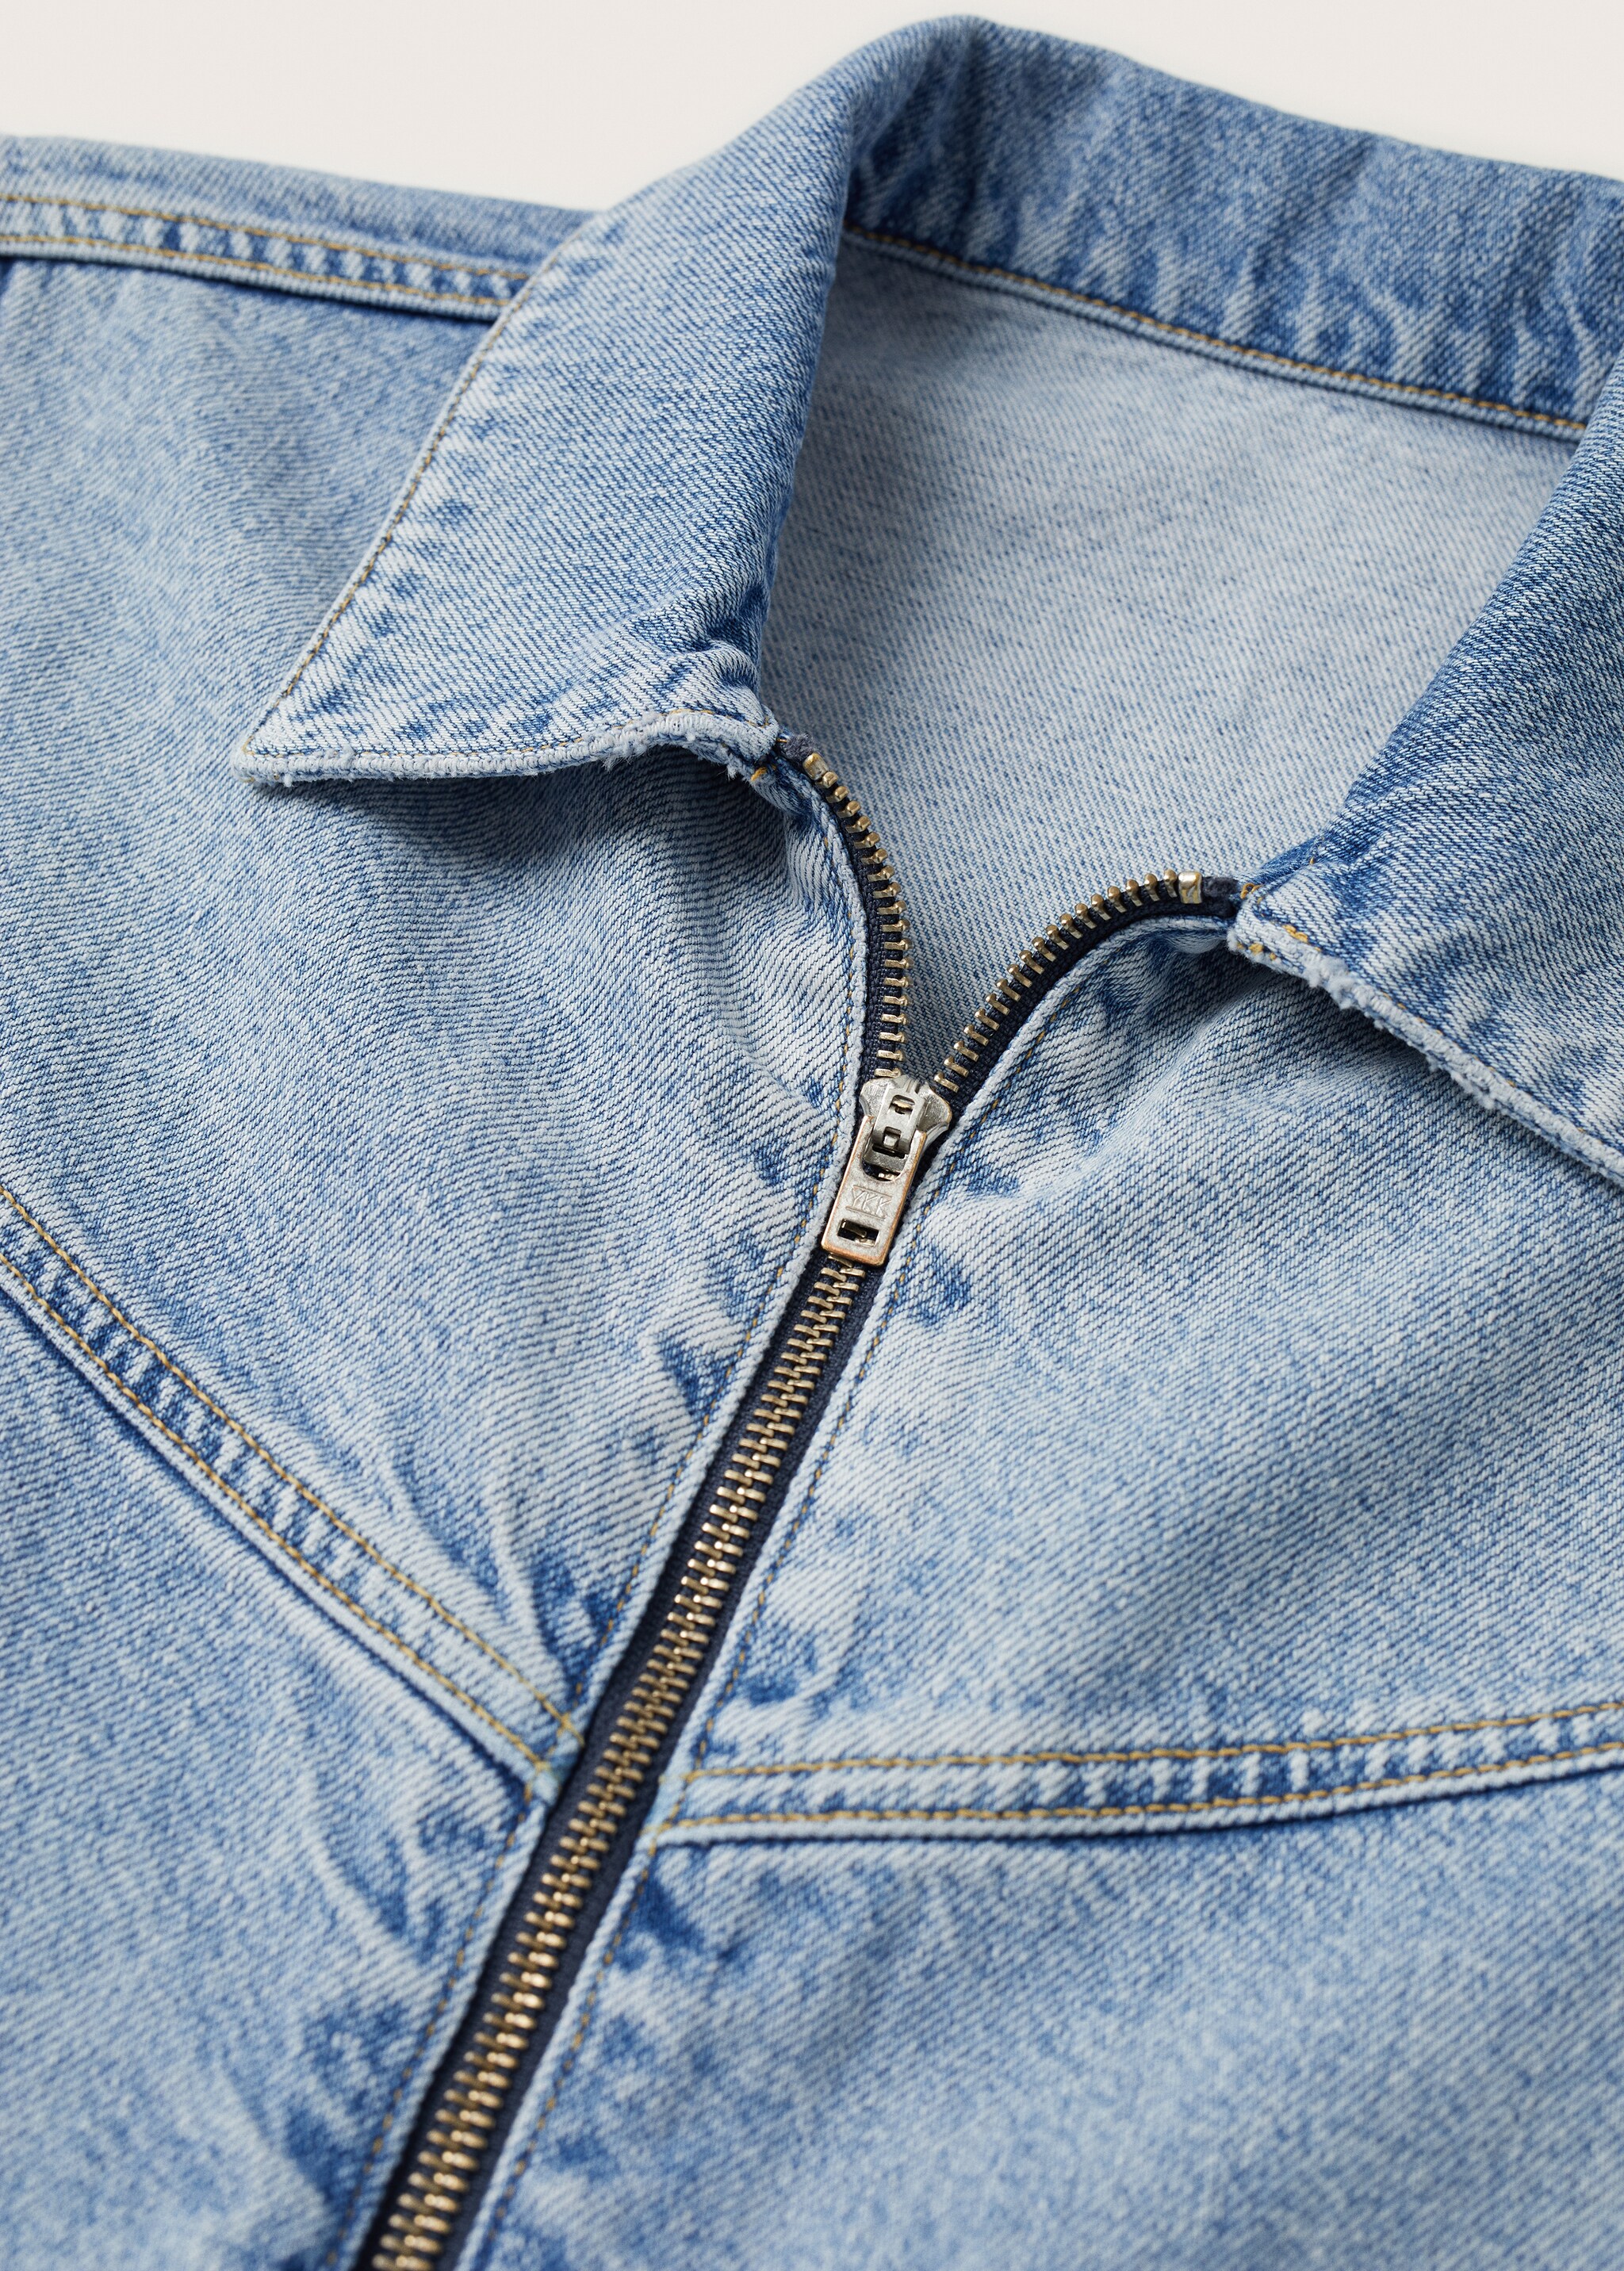 Jeans-Jumpsuit mit Reißverschluss - Detail des Artikels 8